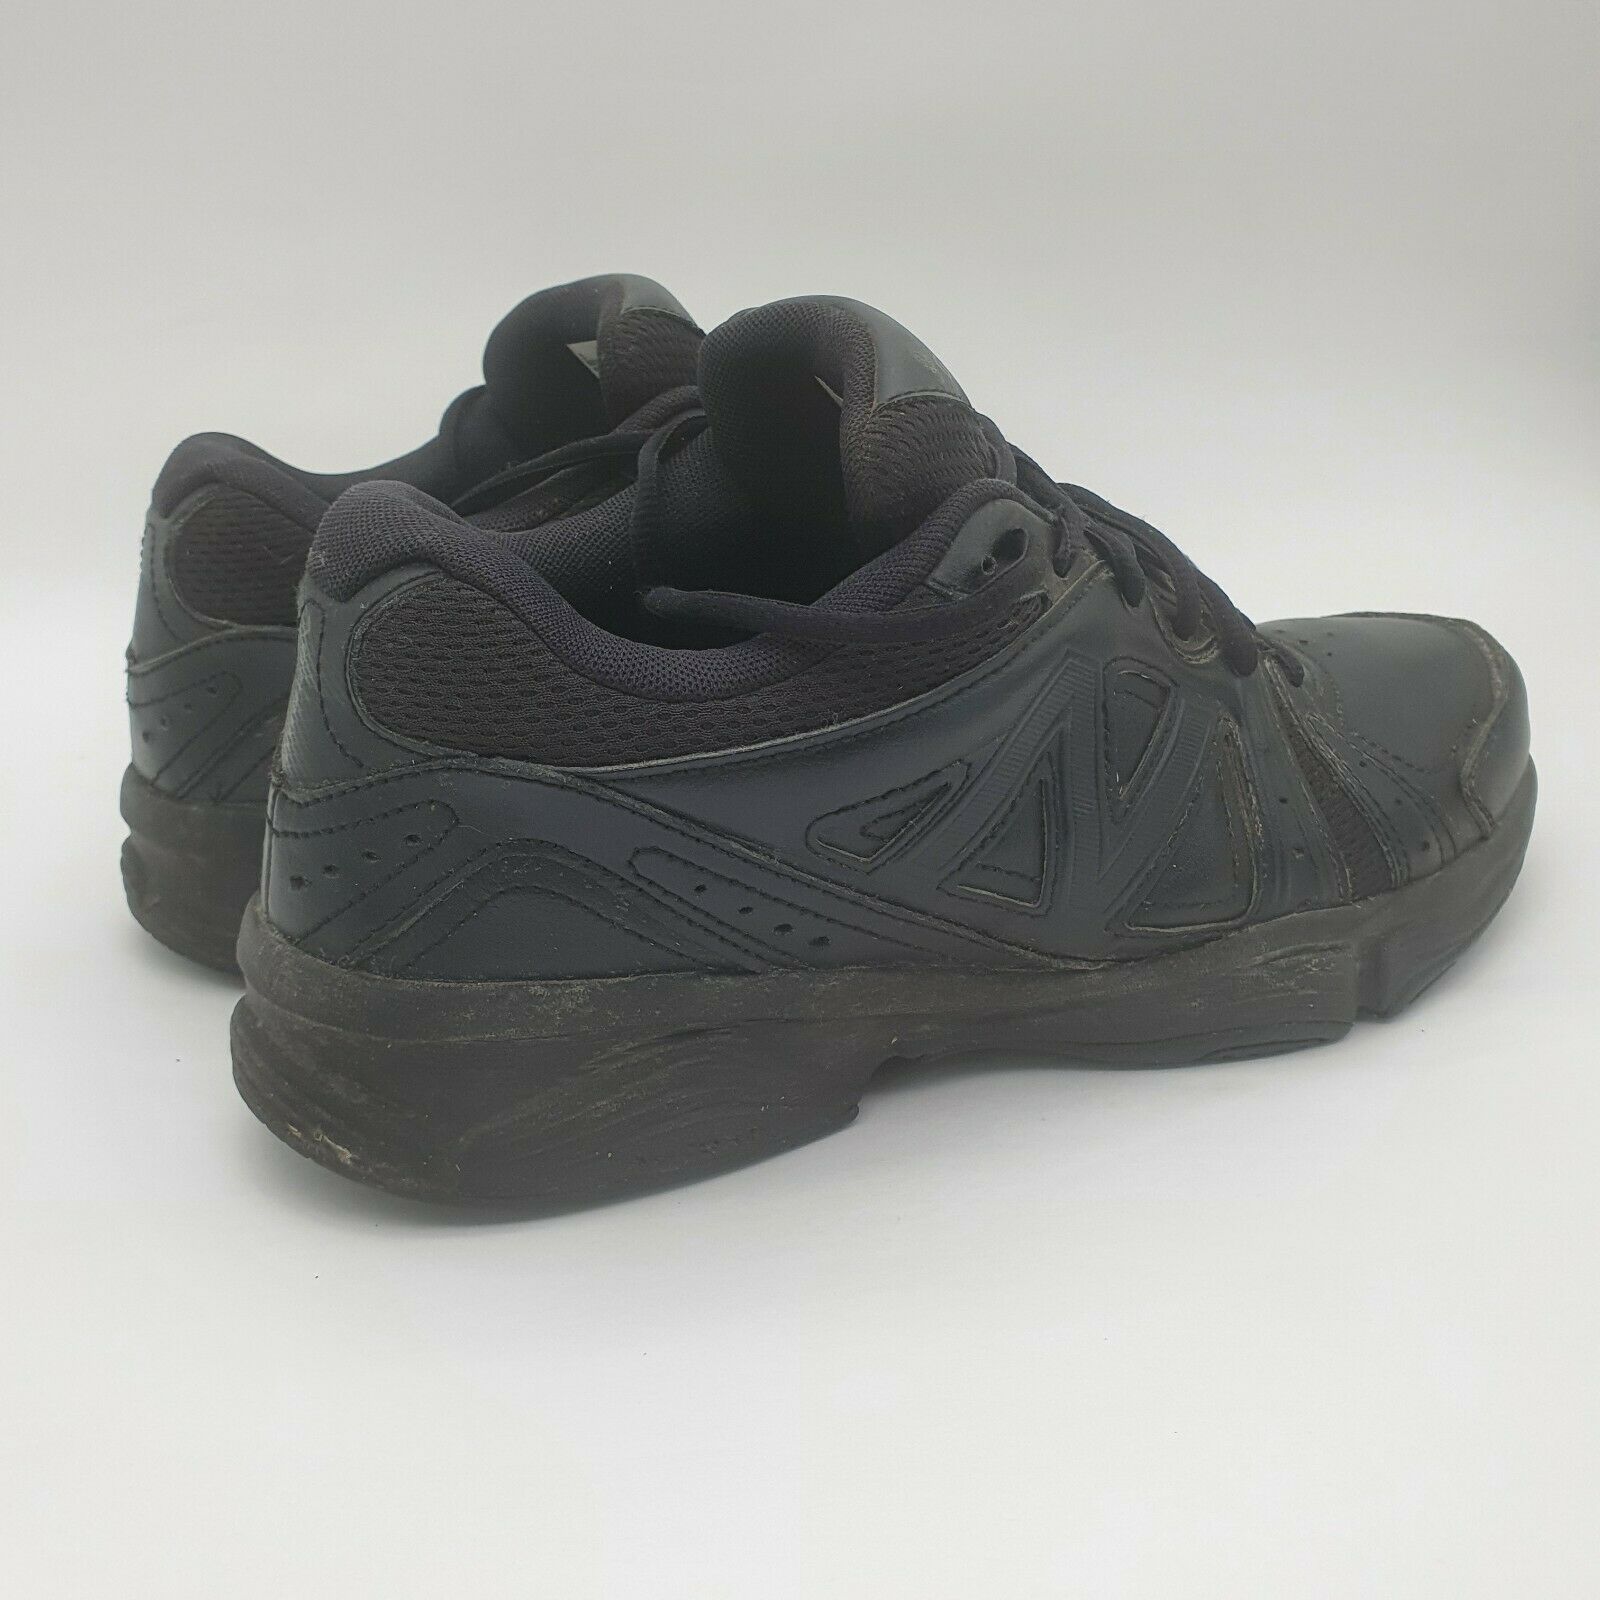 New Balance 519 Cross Training Shoes MX519BK Men's Size 9.5 D - Athletic